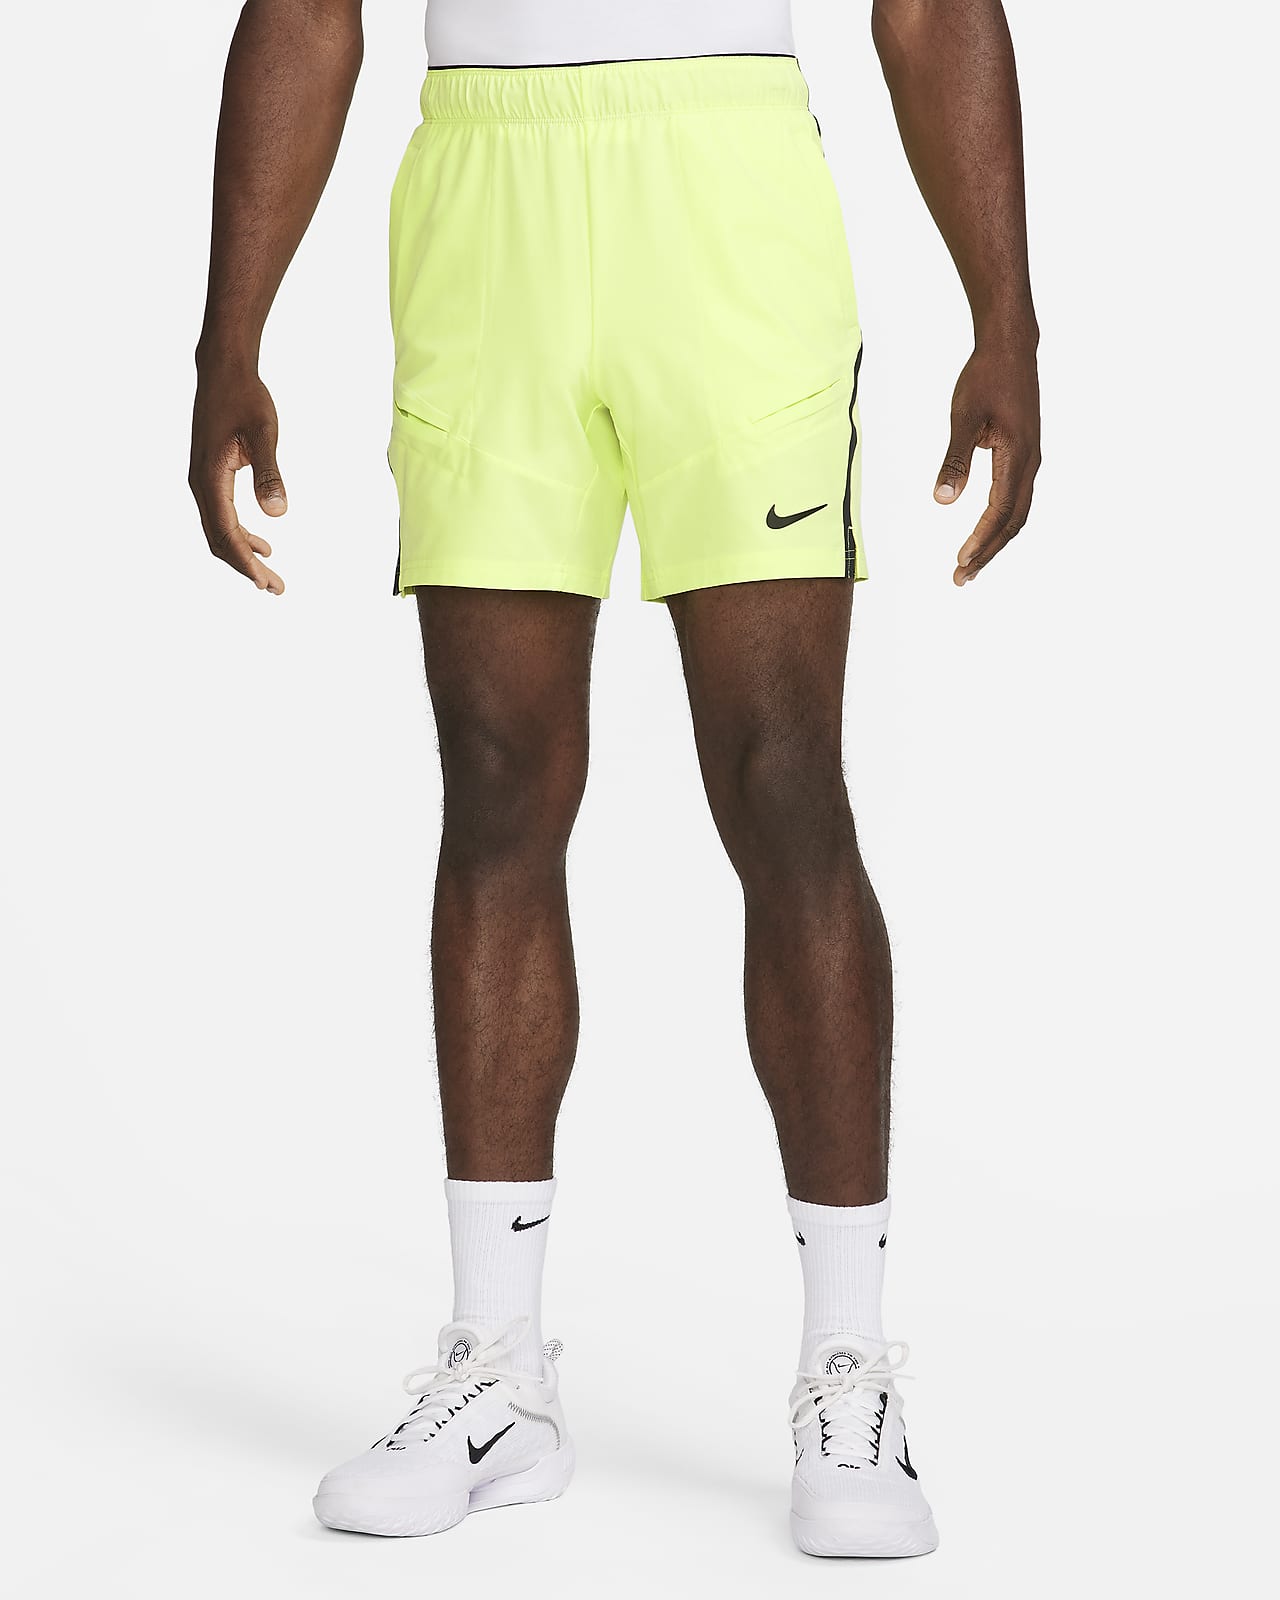 NikeCourt Advantage Men's Tennis Trousers. Nike UK